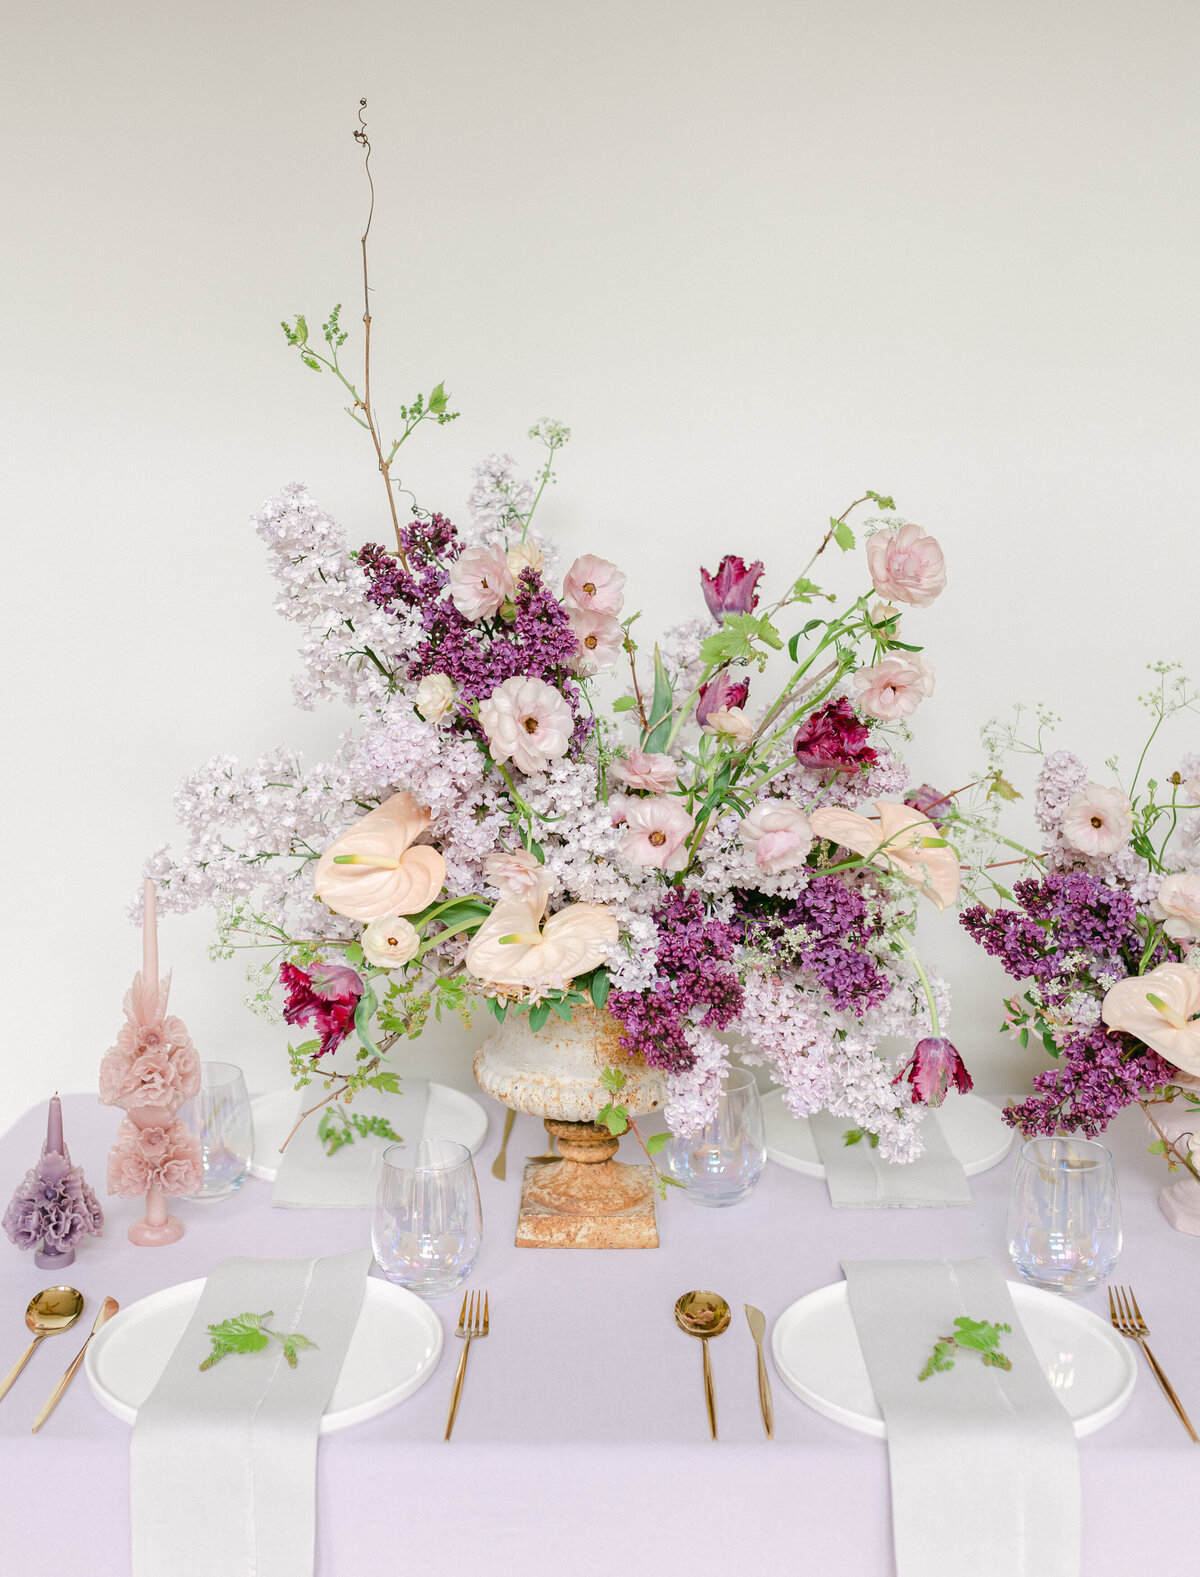 Atelier-Carmel-Wedding-Florist-GALLERY-Arrangements-48